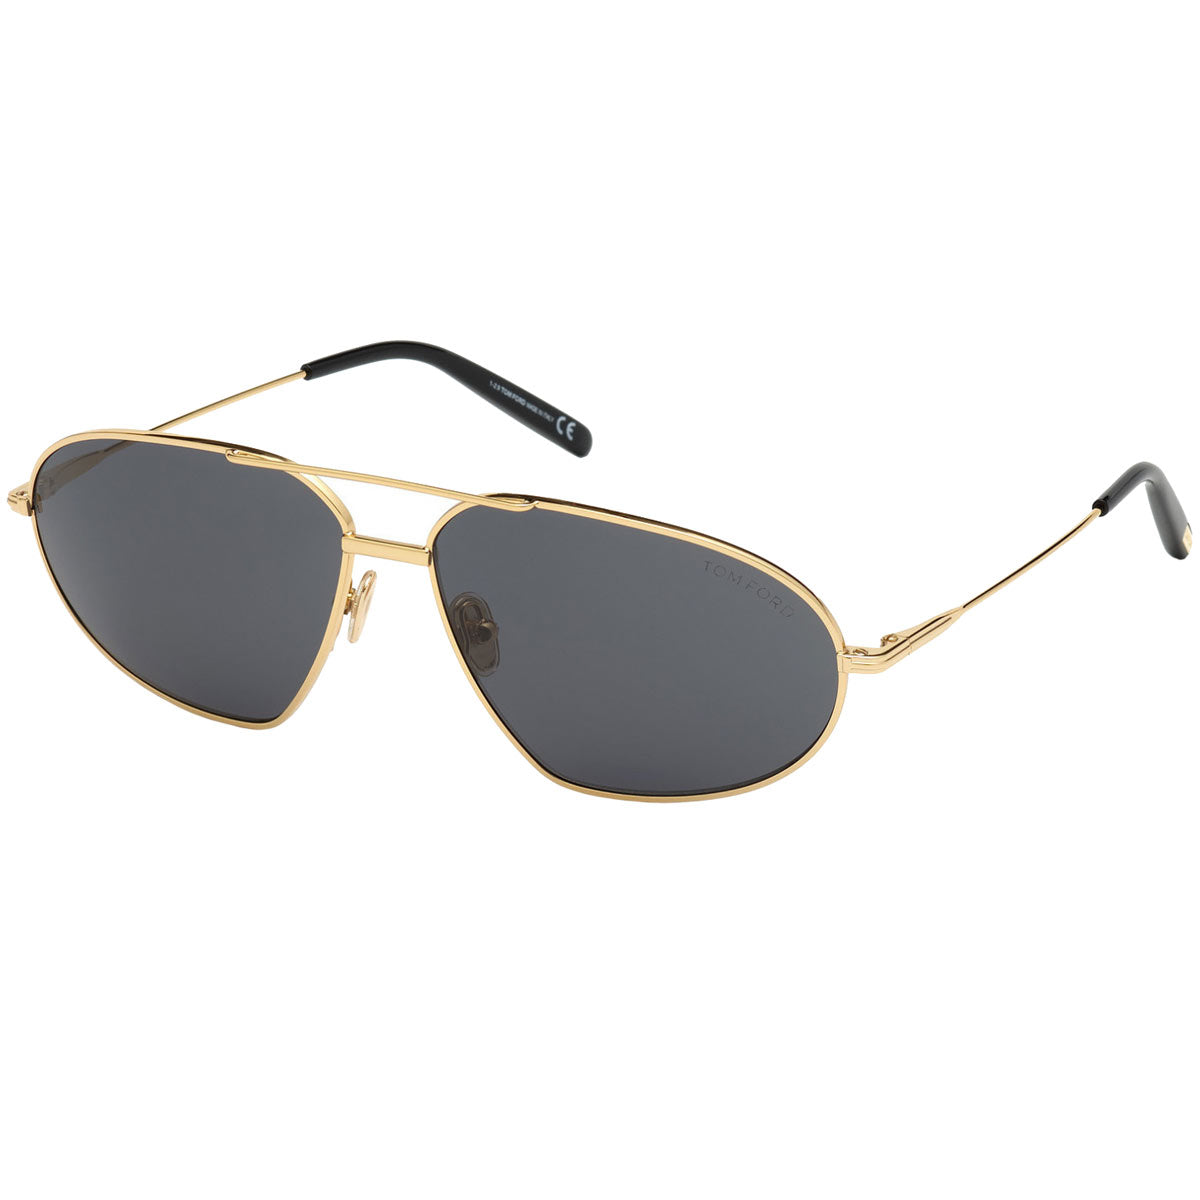 Tom Ford Men's Sunglasses - Bradford Smoke Lens Shiny Gold Frame